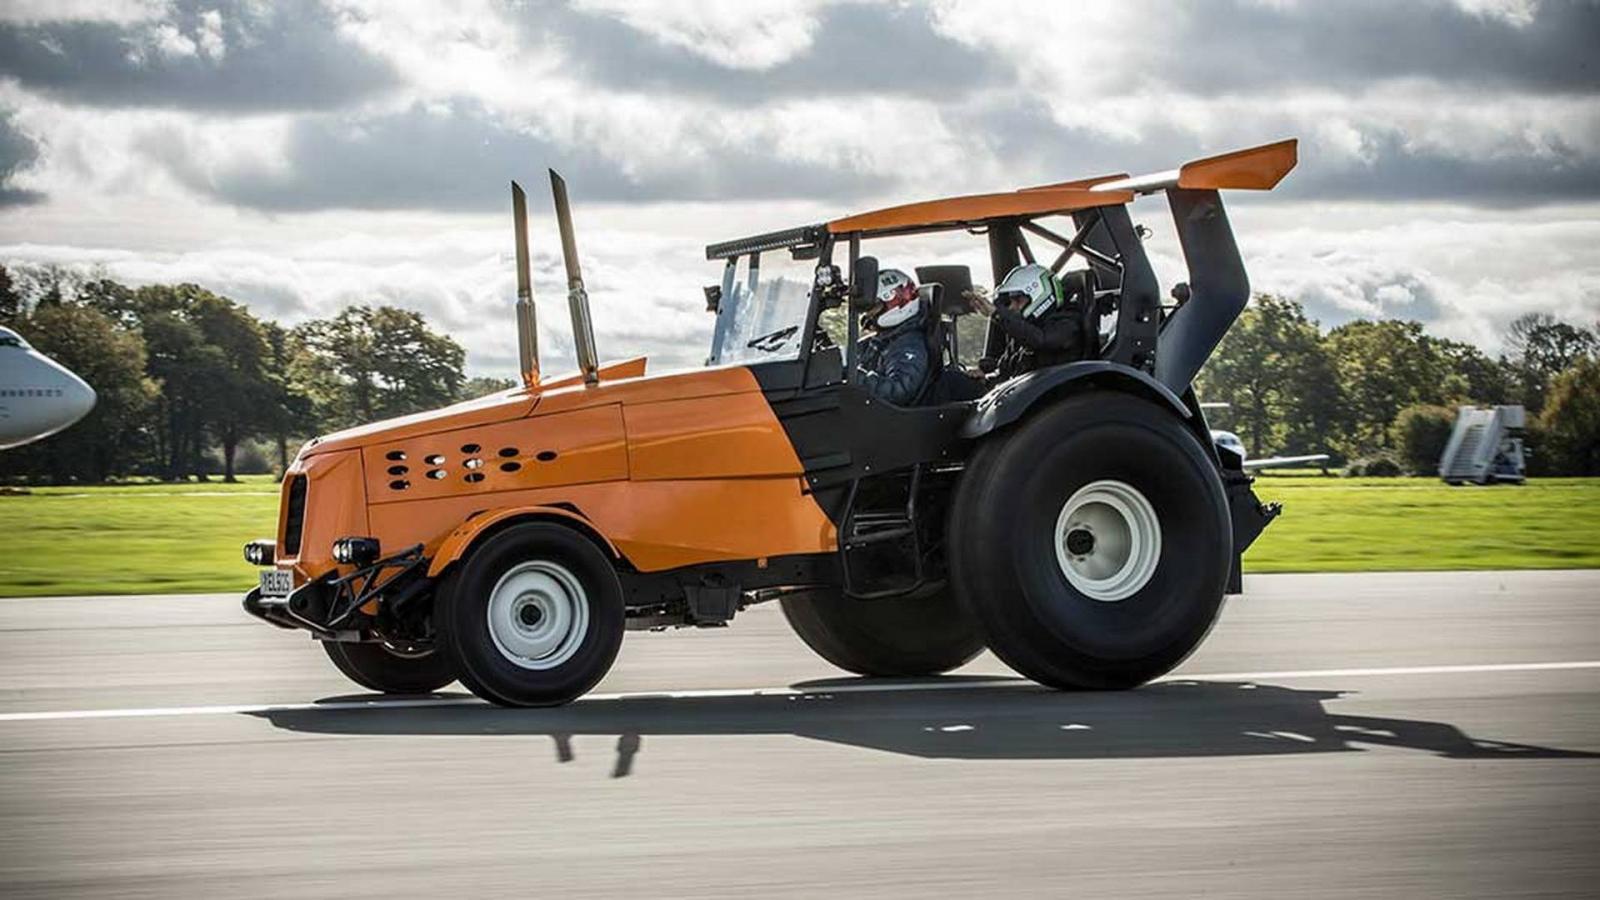 Стиг из Top Gear установил рекорд скорости на тракторе